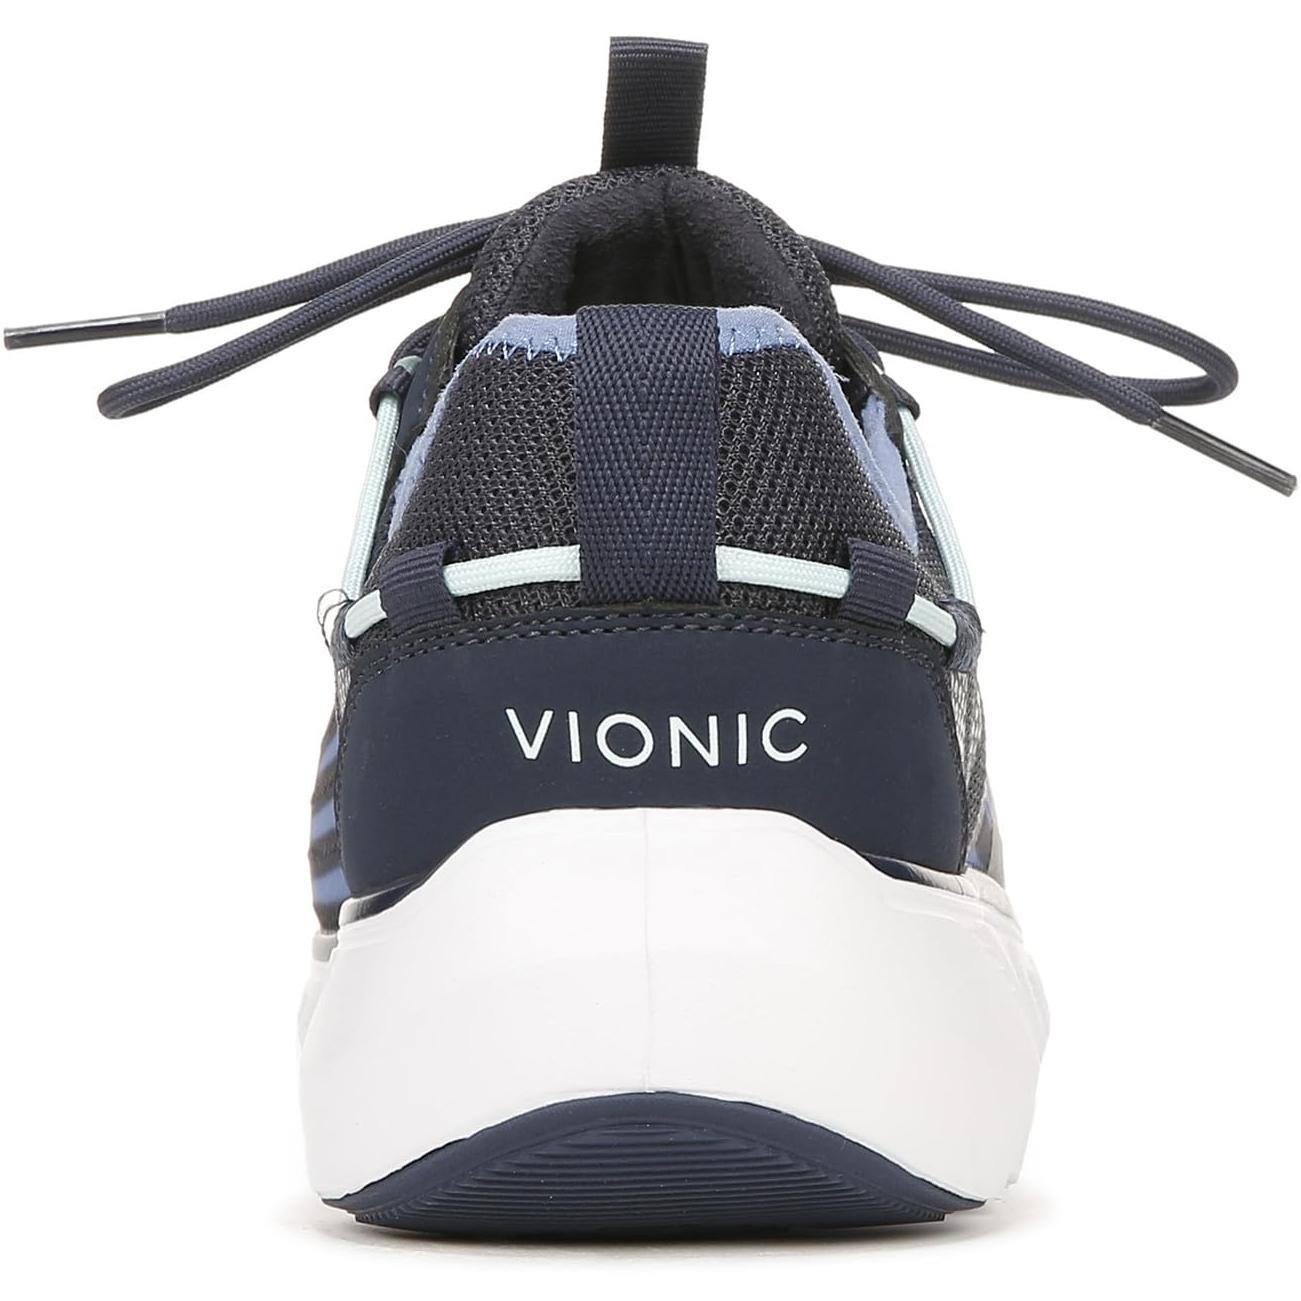 Vionic Phantom Sandals